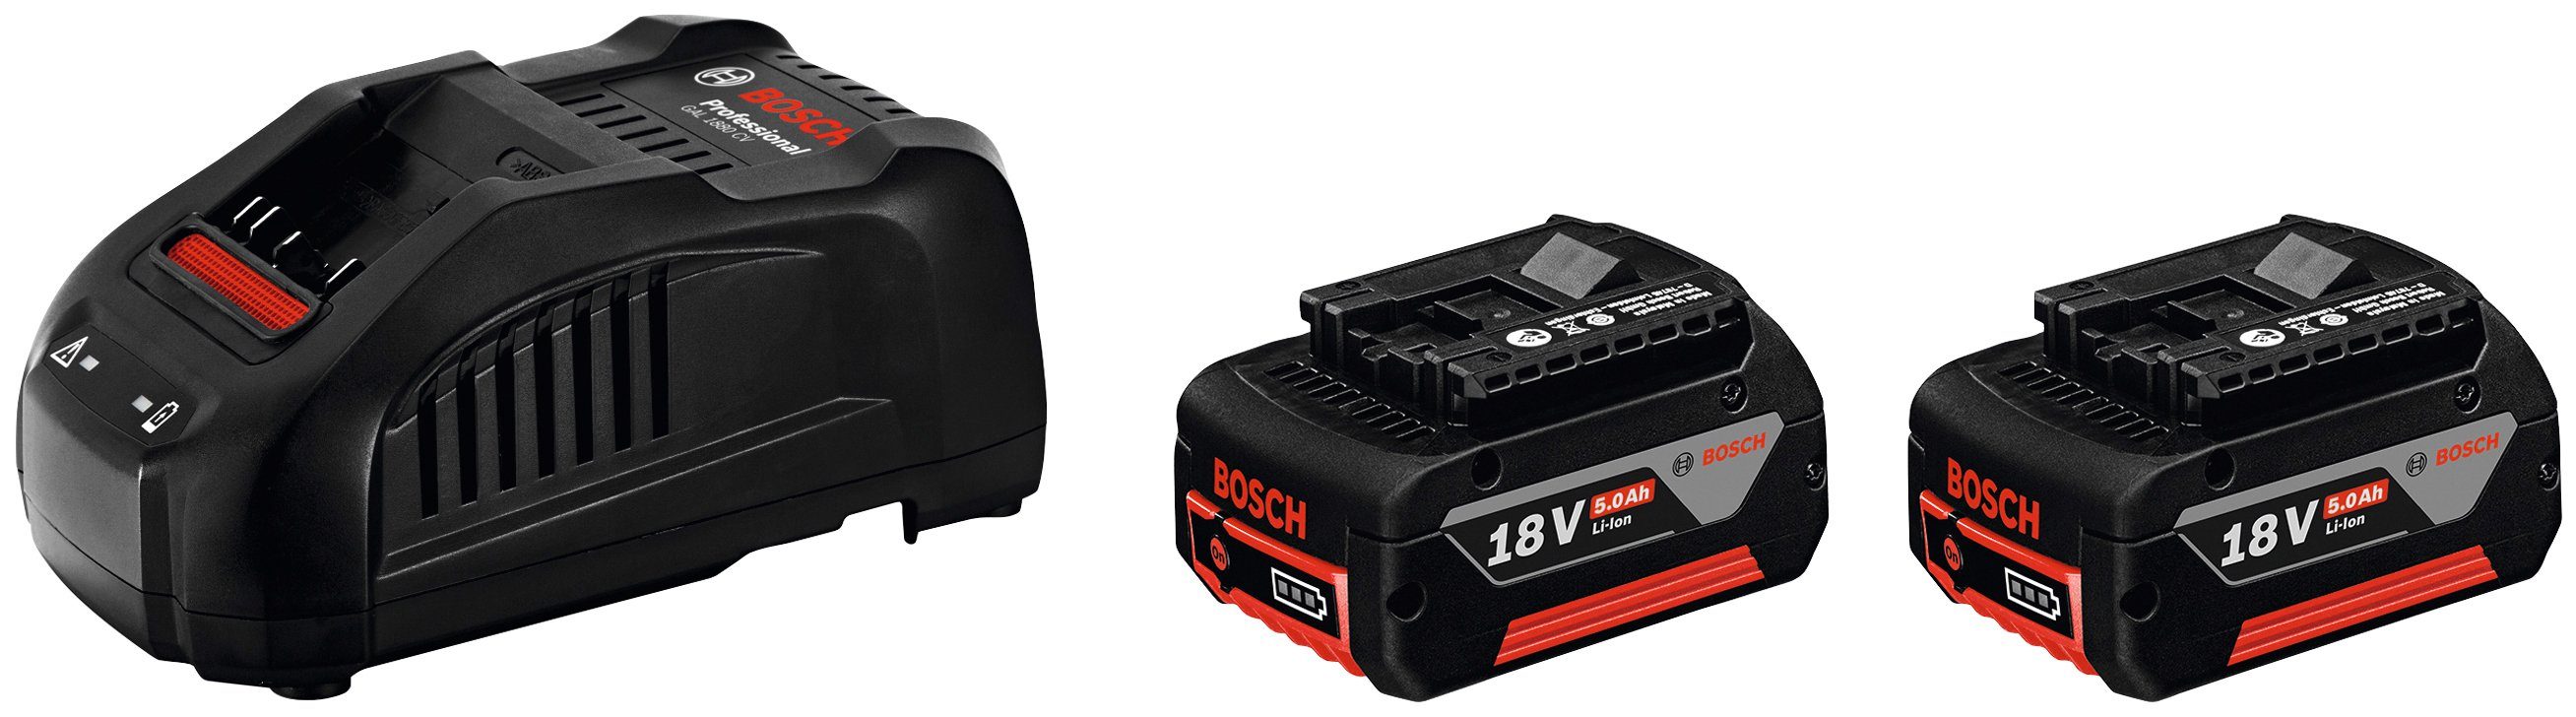 Bosch Professional GAL 1880 CV Ladegerät Akku 18V / 5.0Ah GBA Starter-Set, inkl